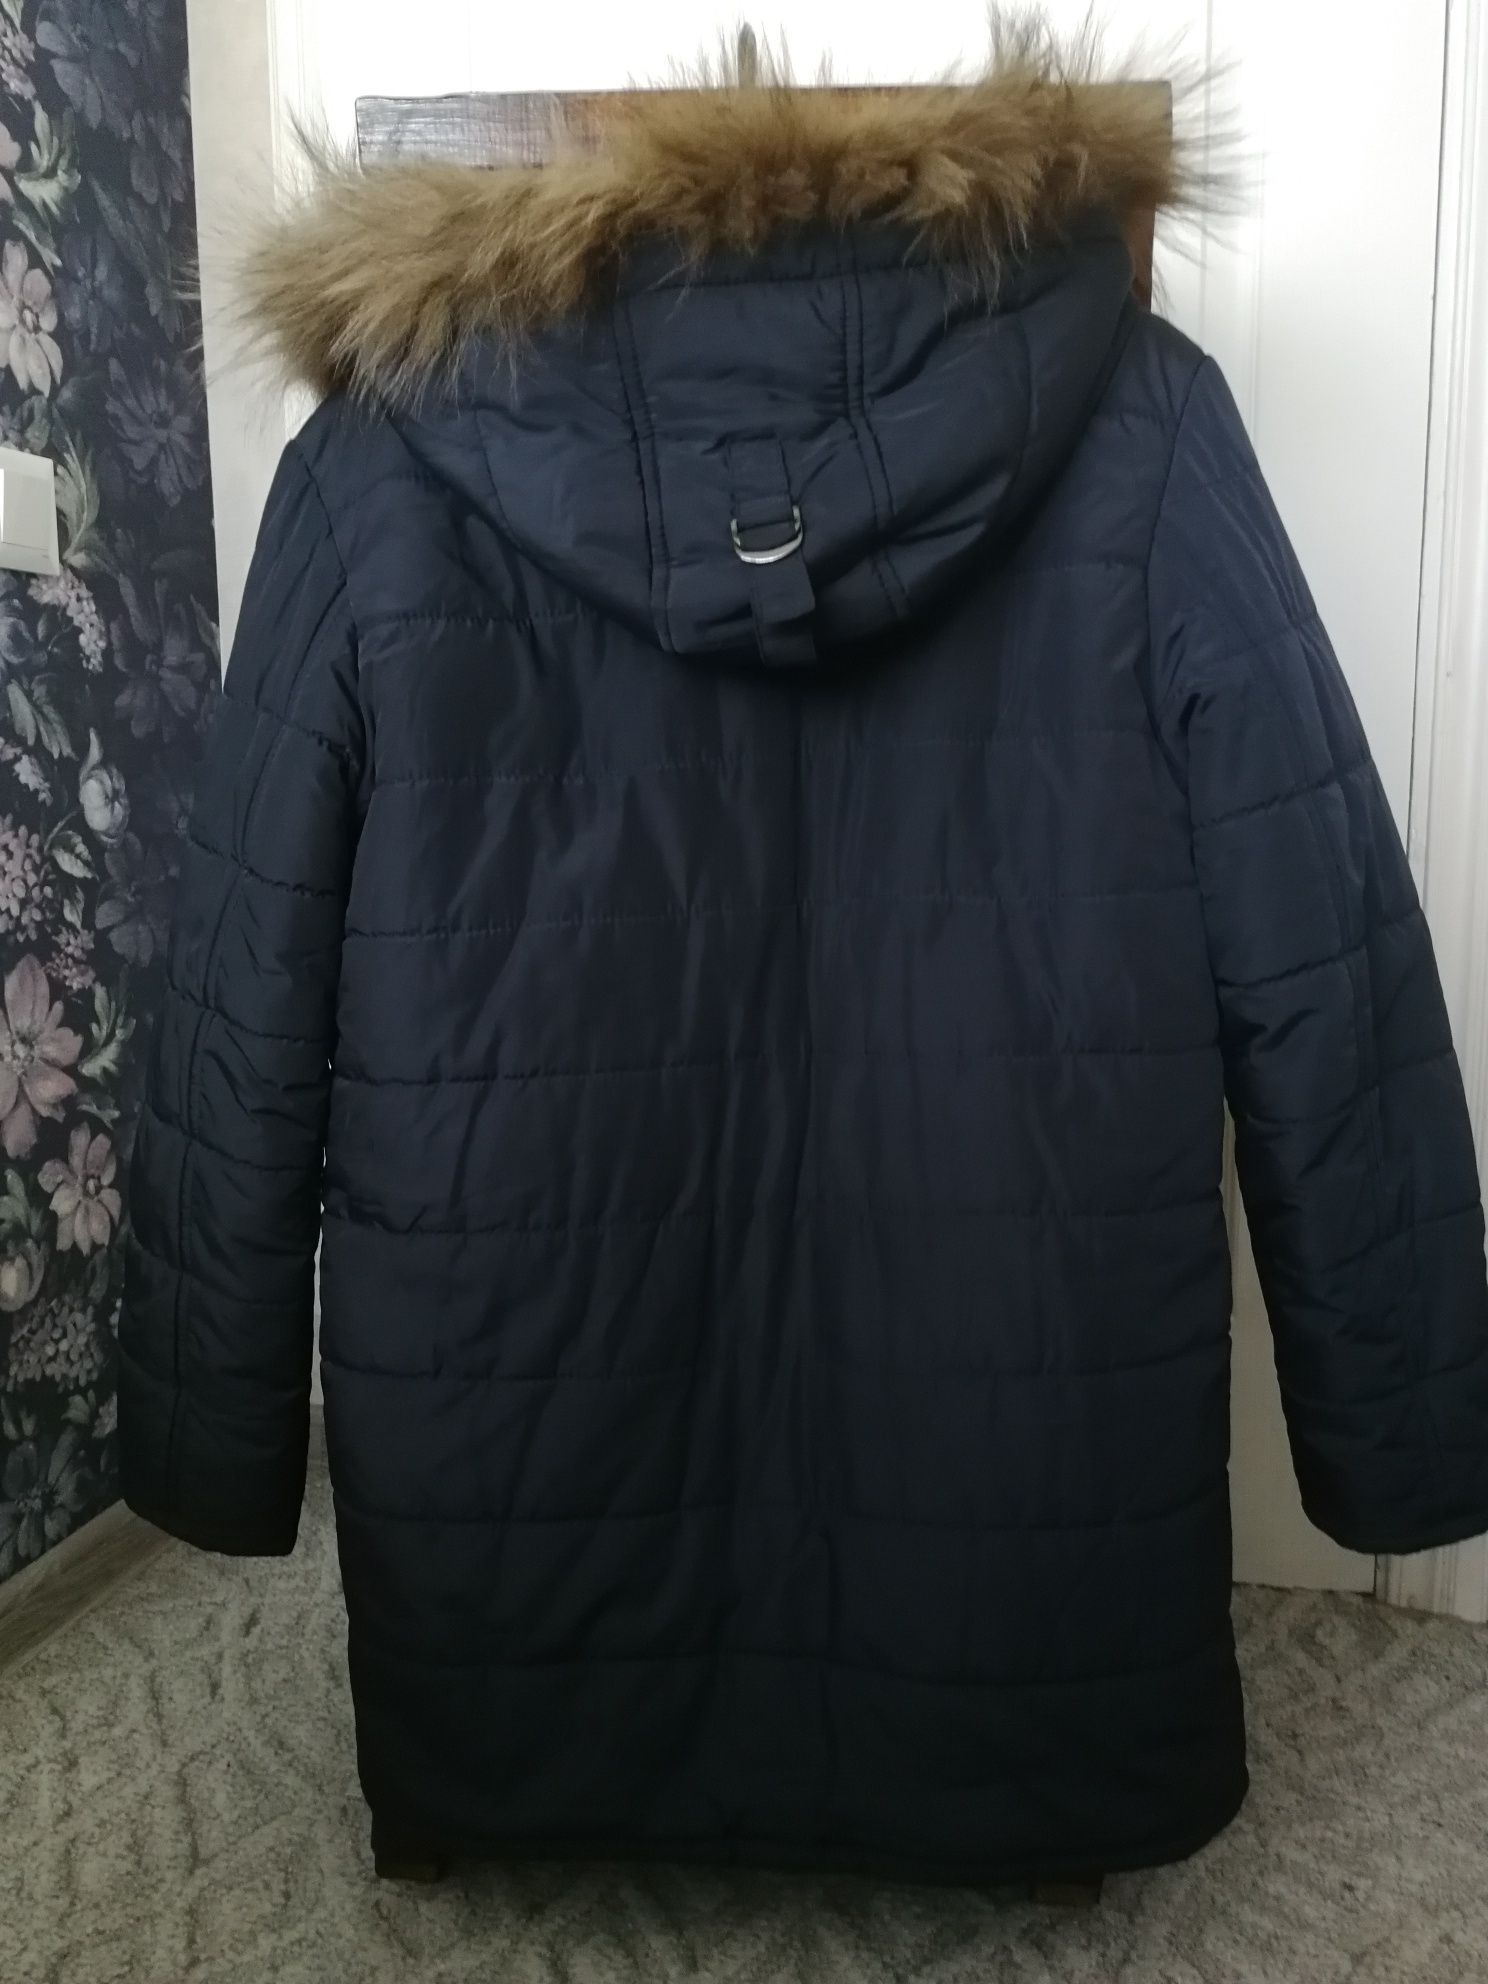 Куртка пальто зима 46р